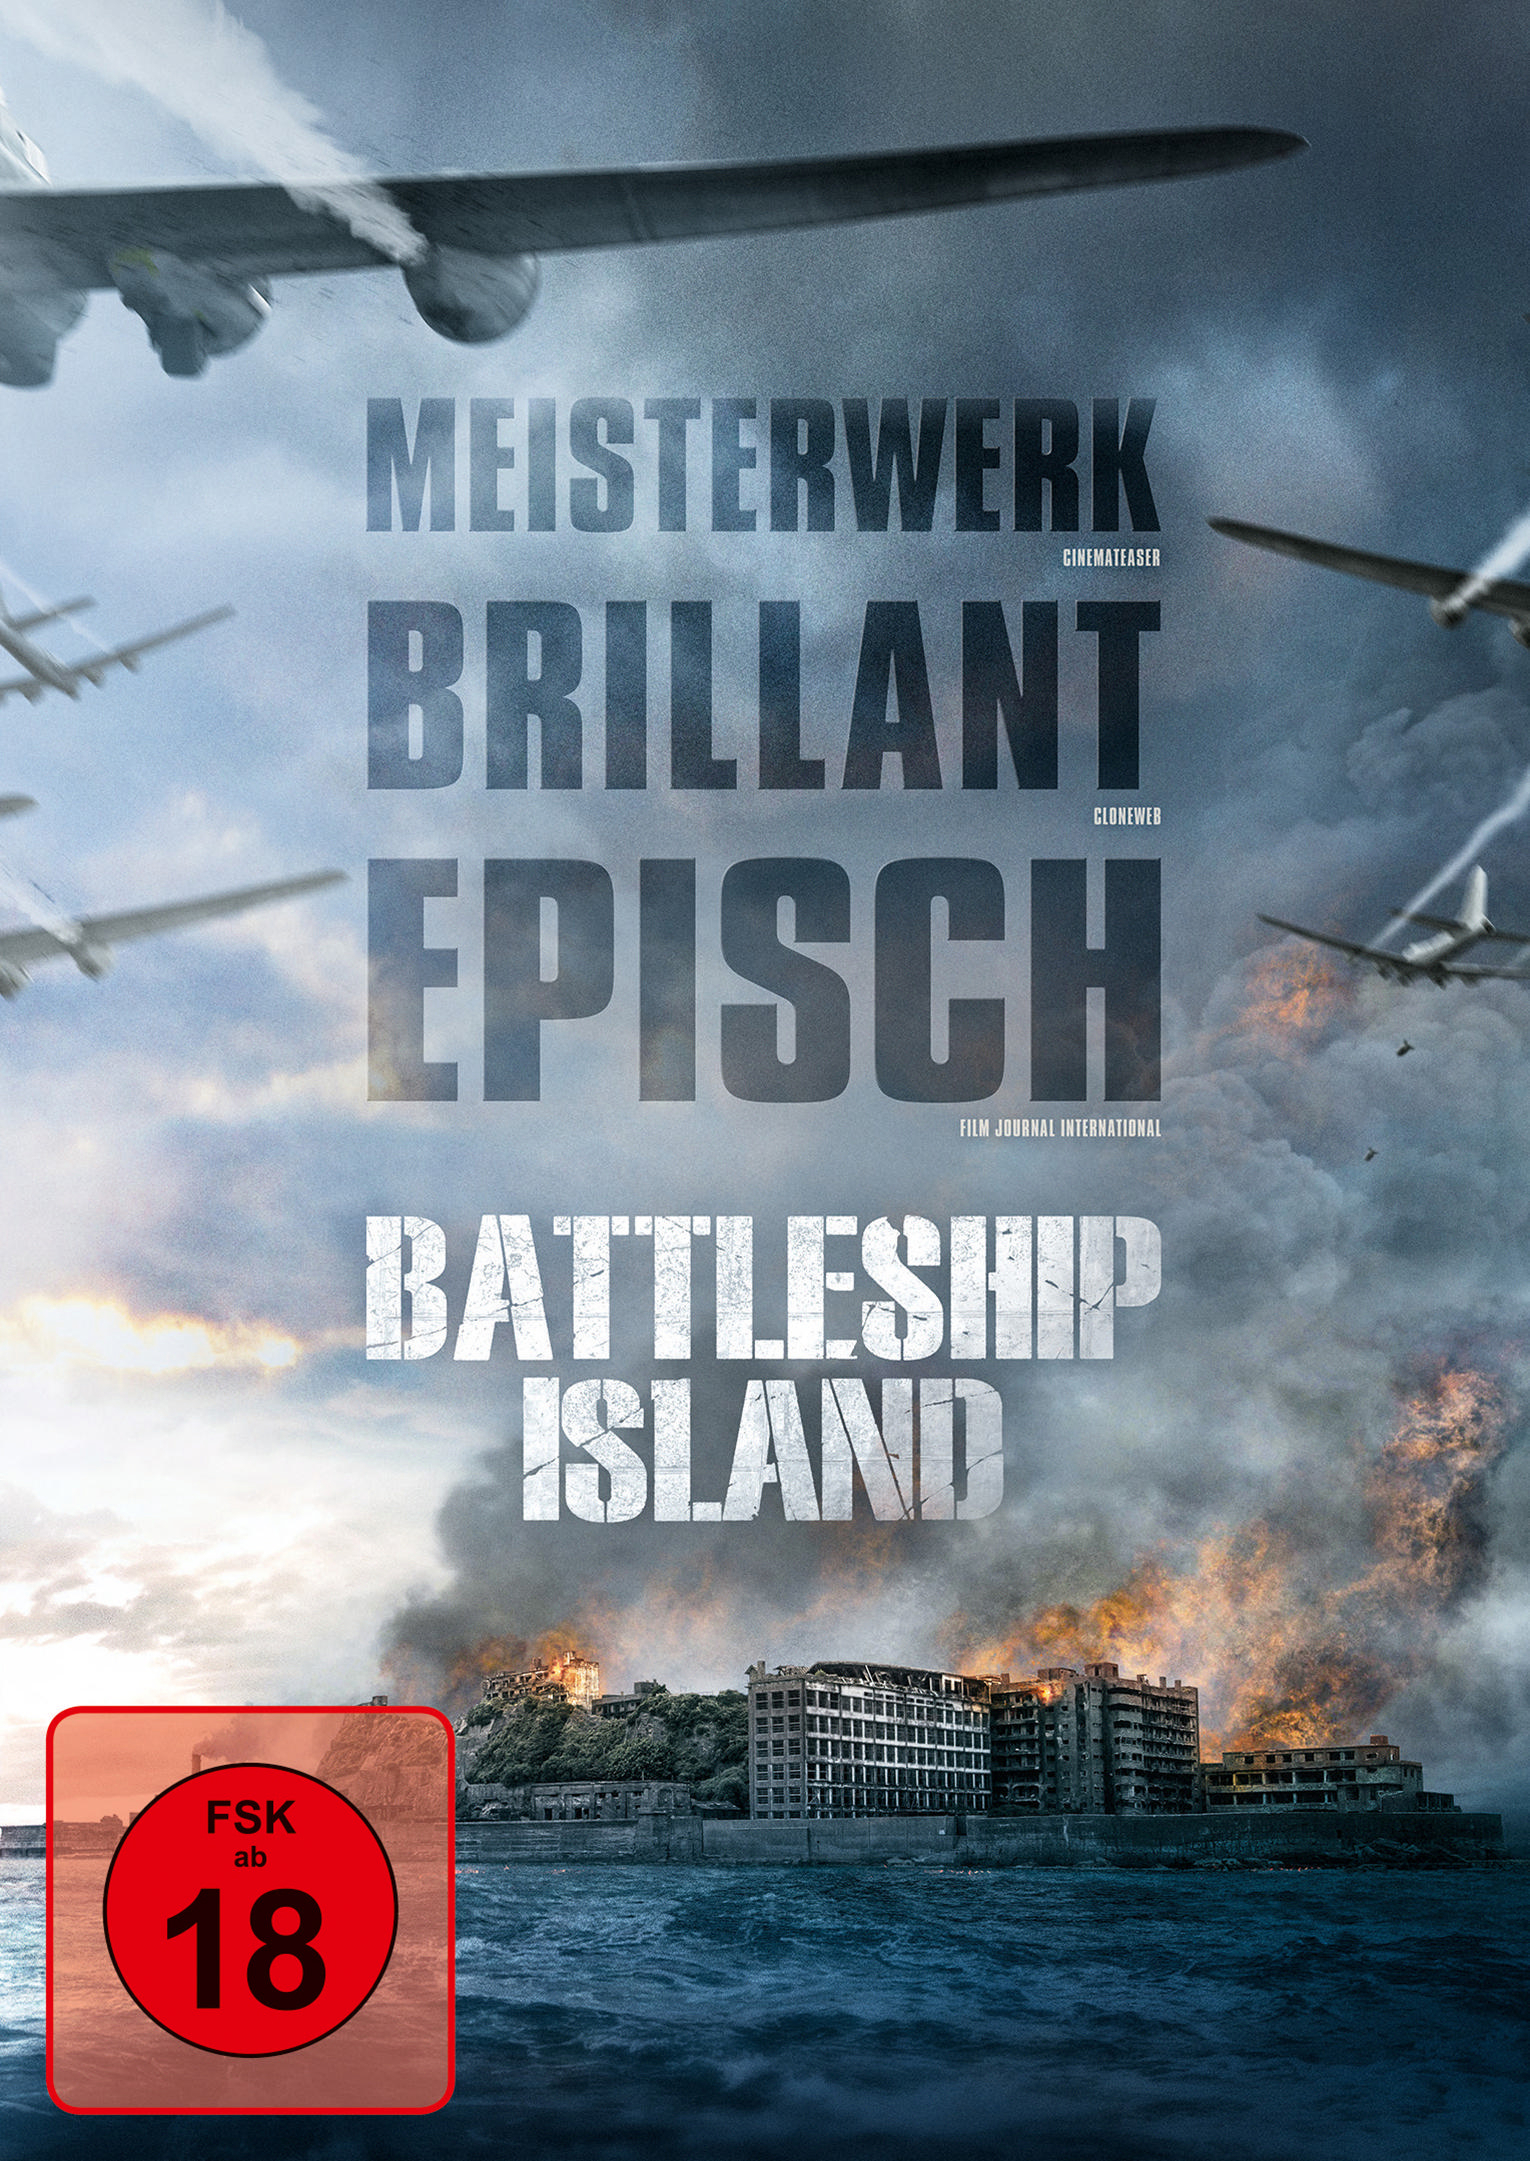 BATTLESHIP ISLAND DVD